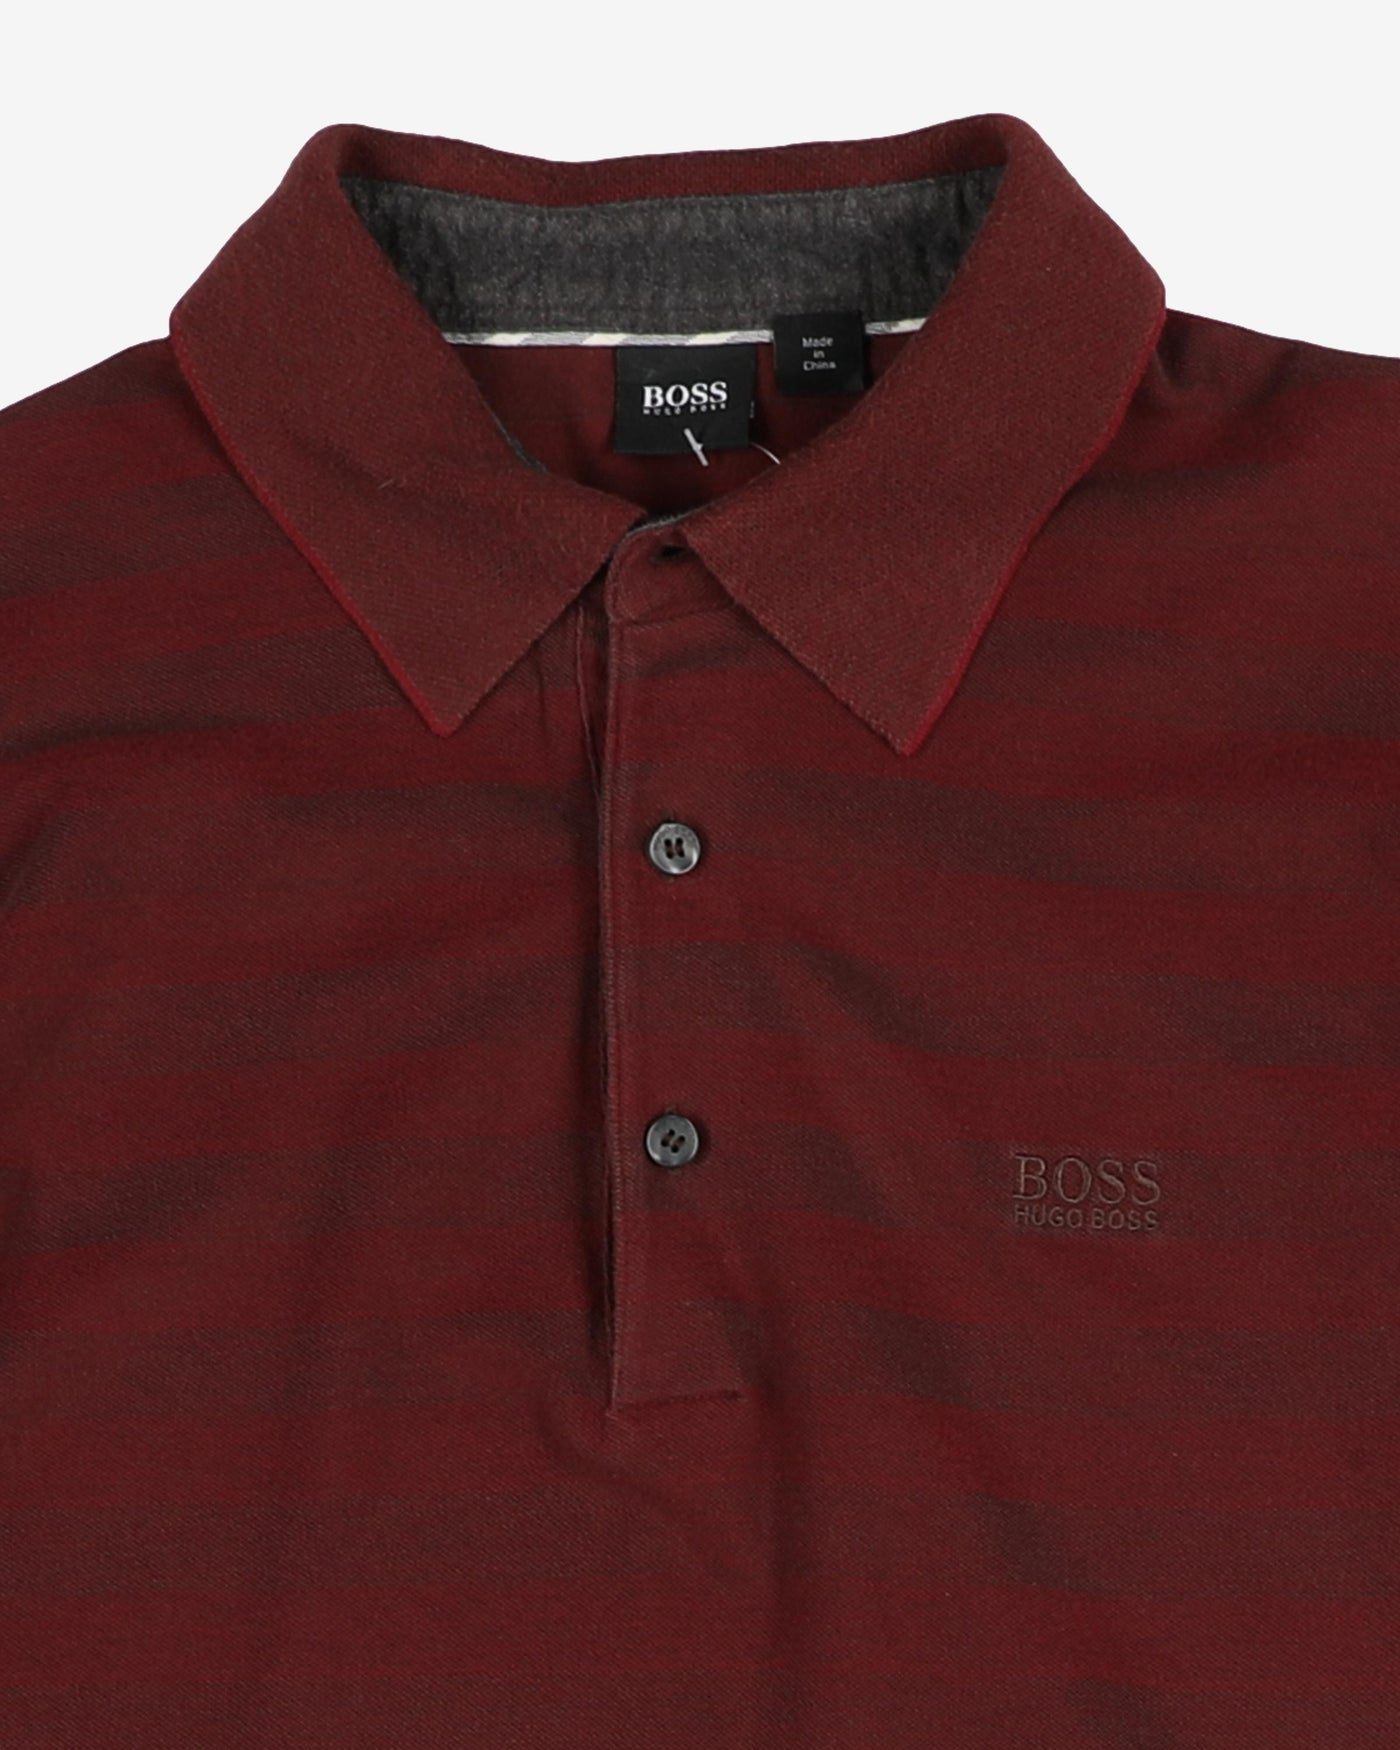 Long Sleeve Burgundy Hugo Boss Polo Shirt - XL